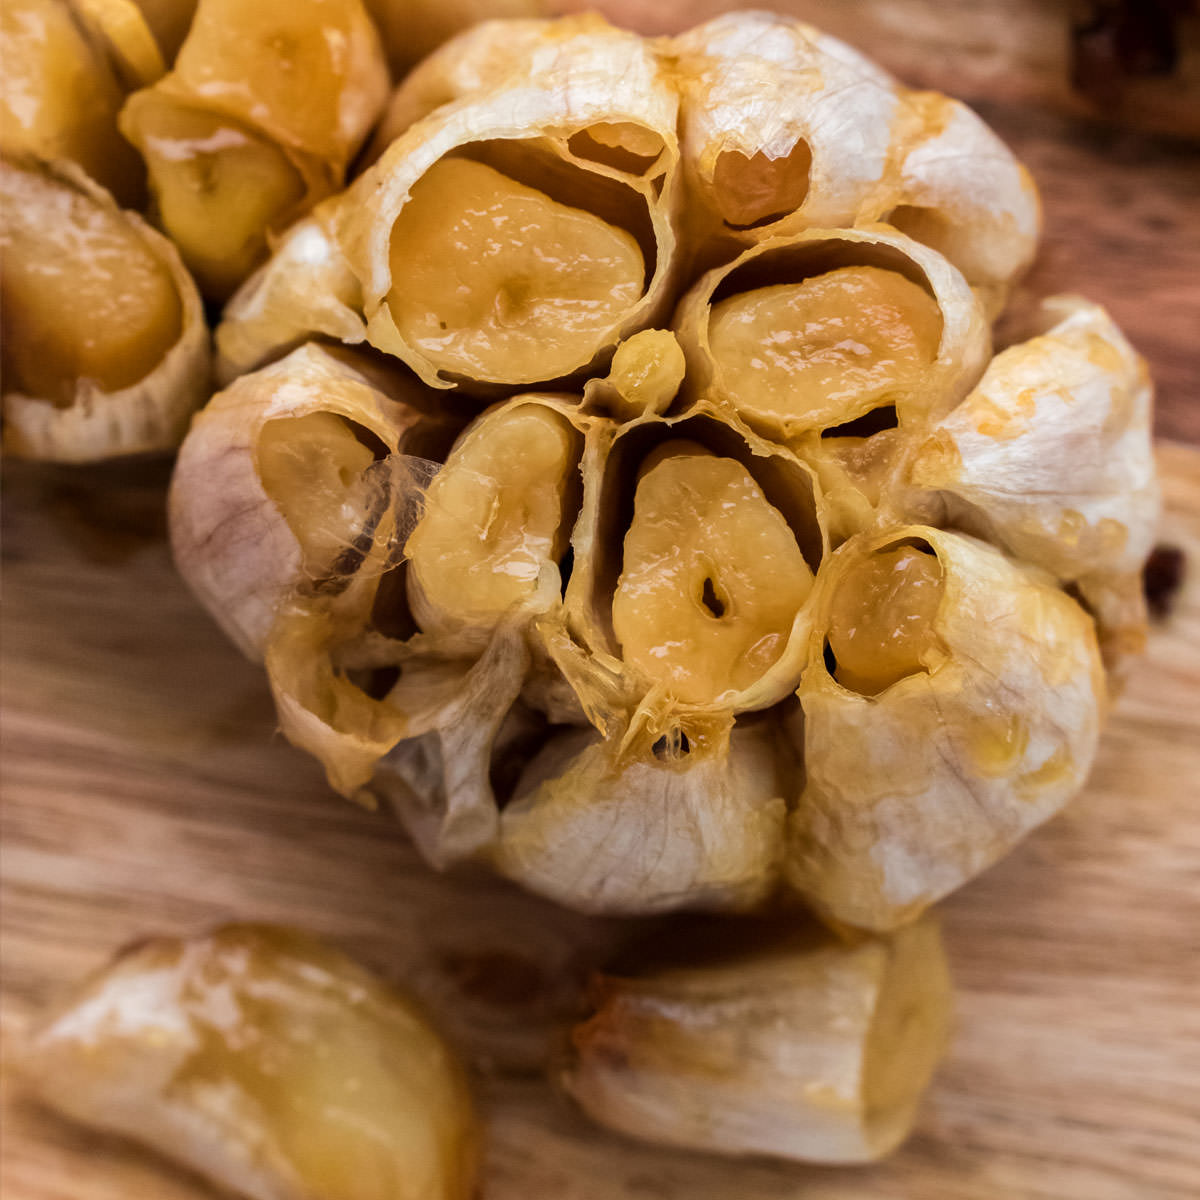 Closeup overhead shot of a roasted head of garlic sitting on a cutting board.